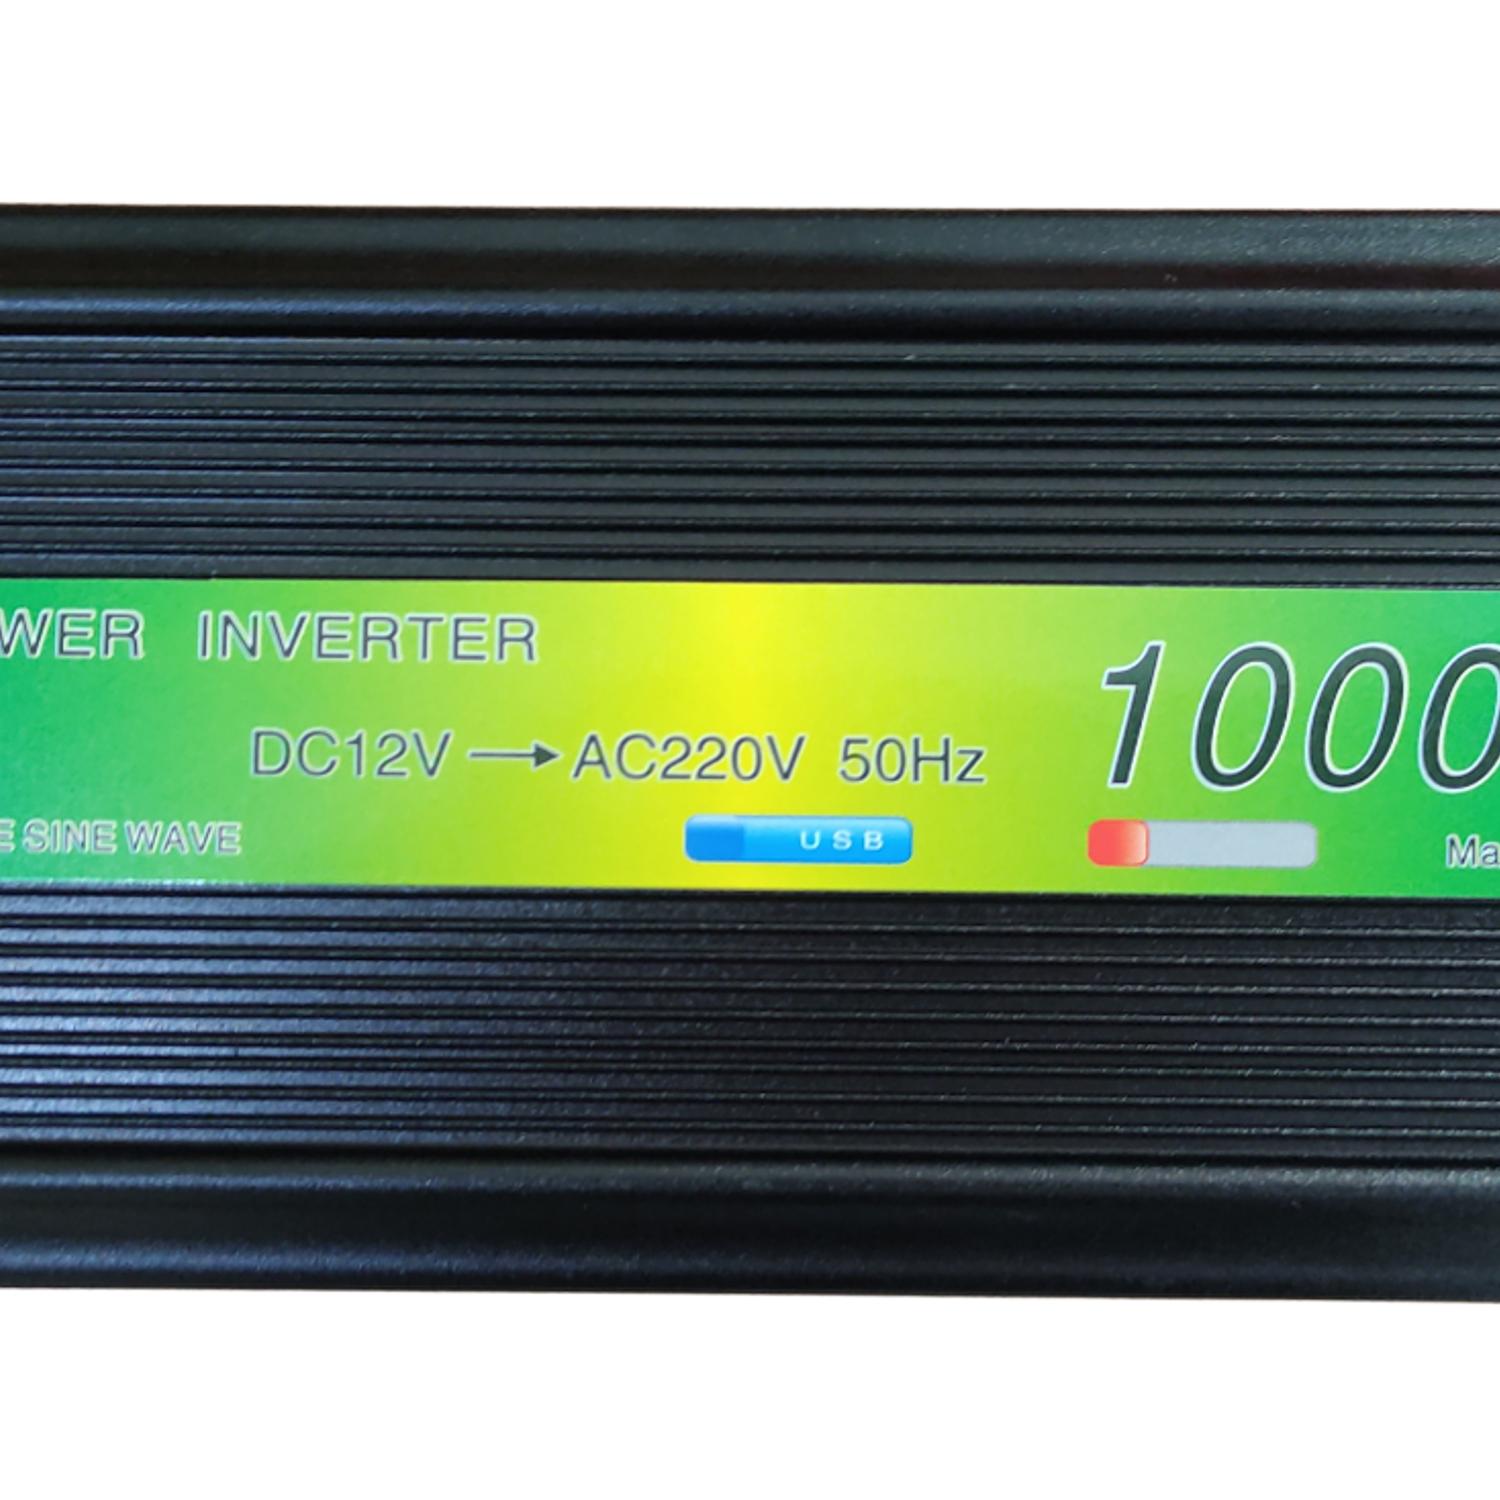 Cargador Controlador Carga PWM Panel Solar 30A 12V/24V W88-C, w88-c 